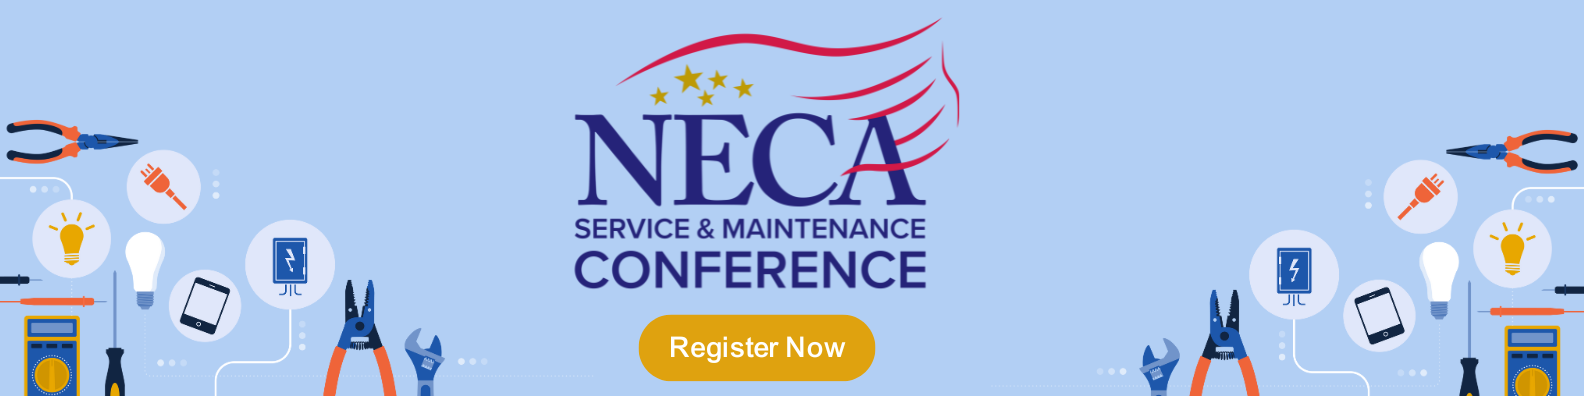 NECA Service & Maintenance Conference Banner